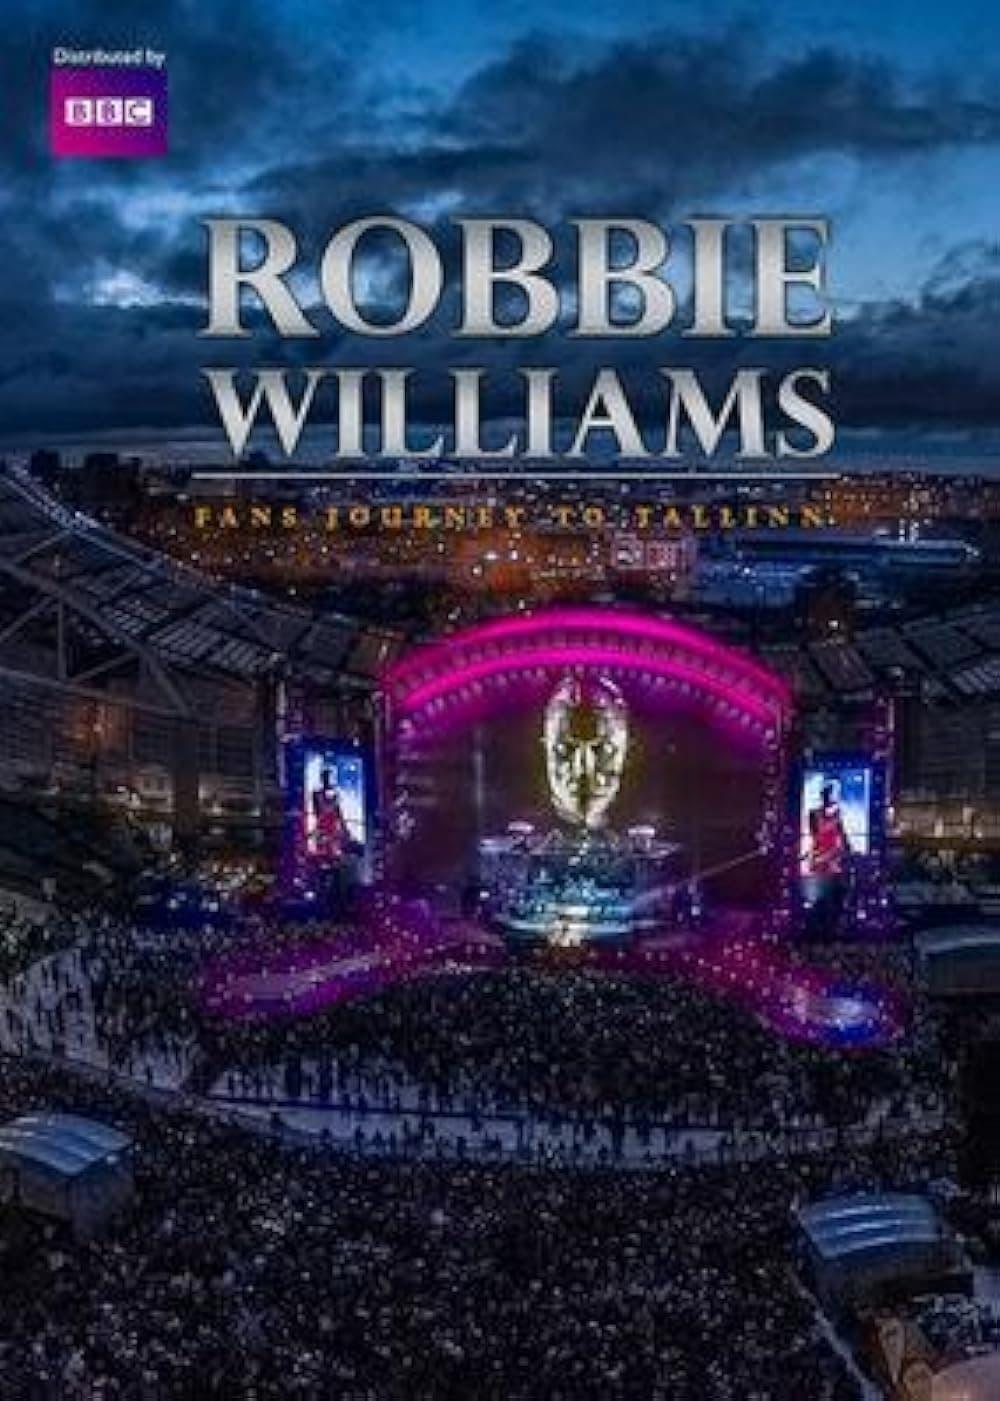 Robbie Williams: Fans Journey to Tallinn poster